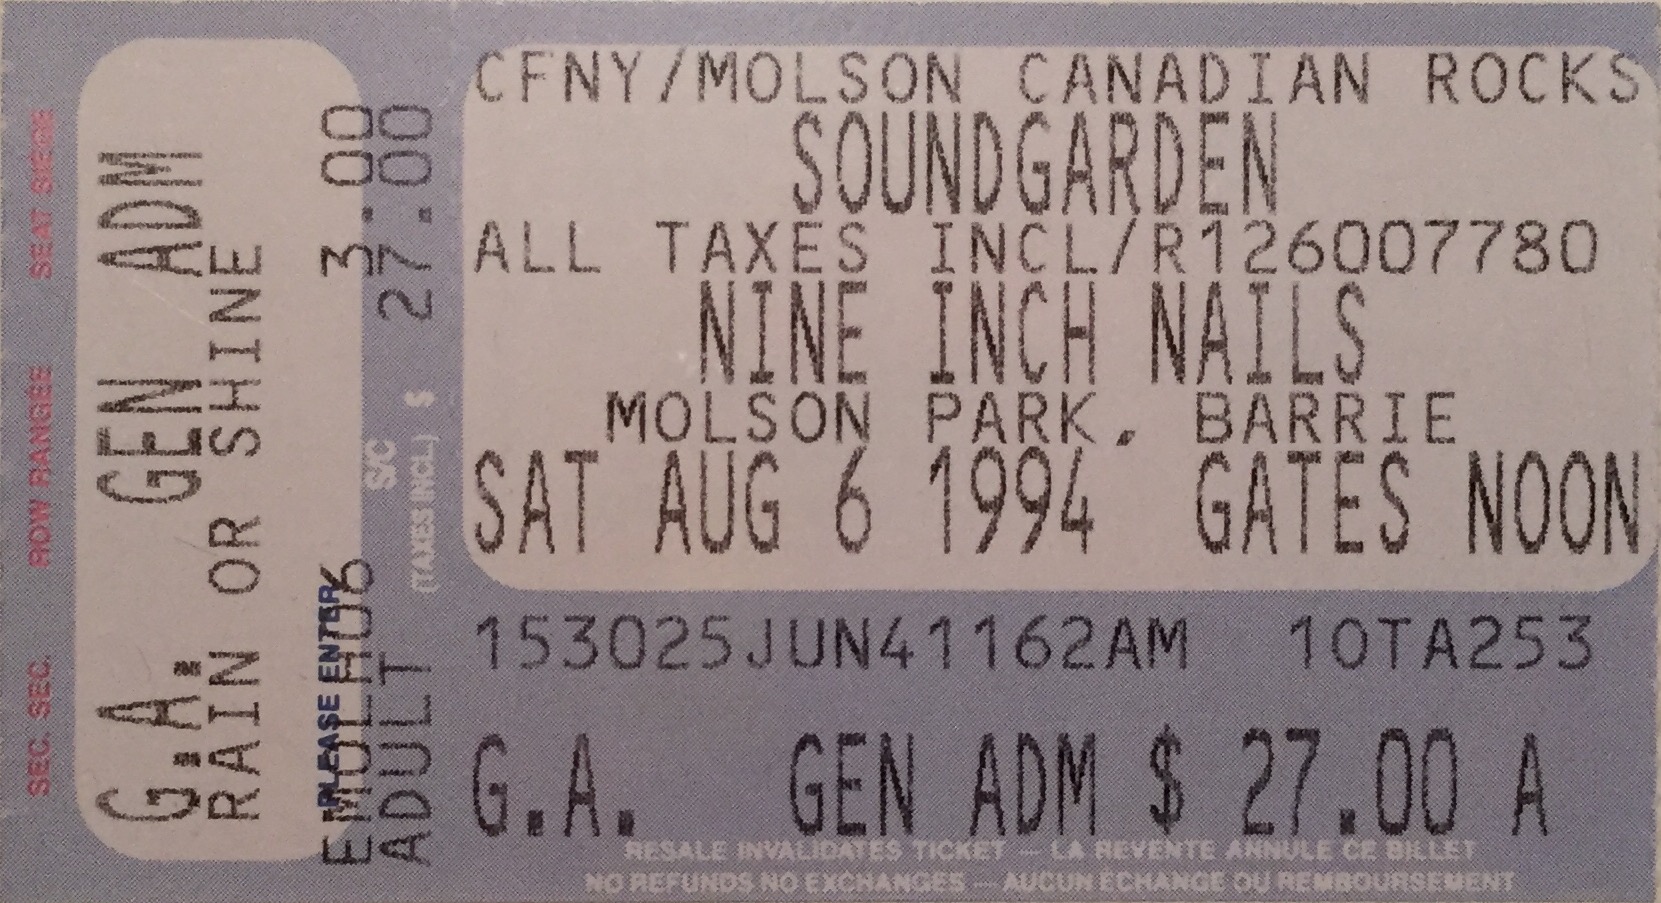 1994/08/06 Ticket